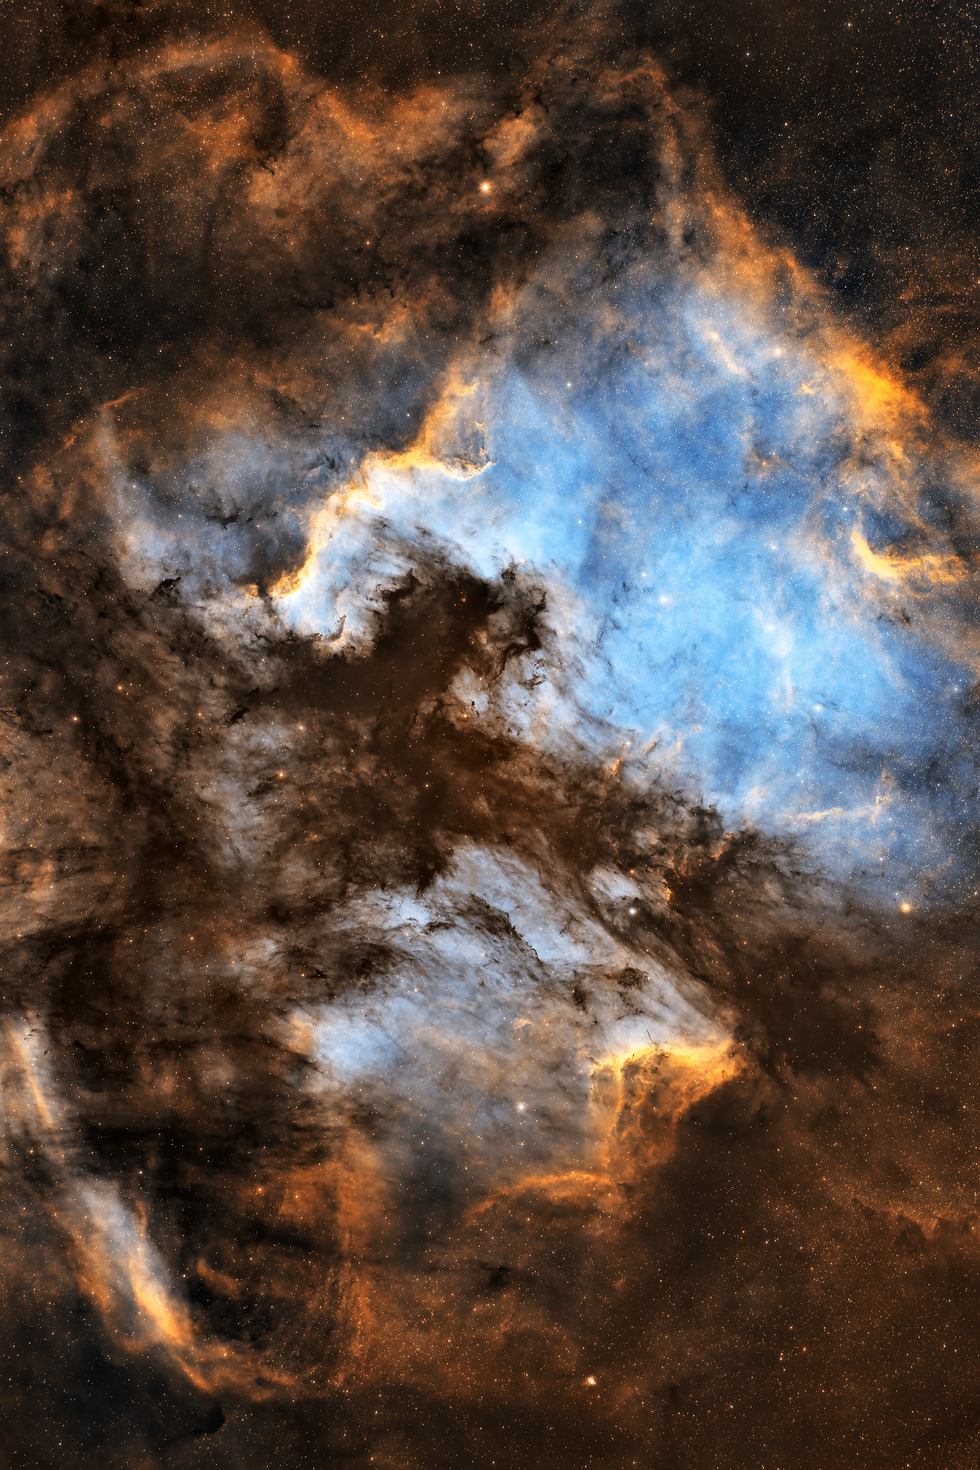 The North American Nebula